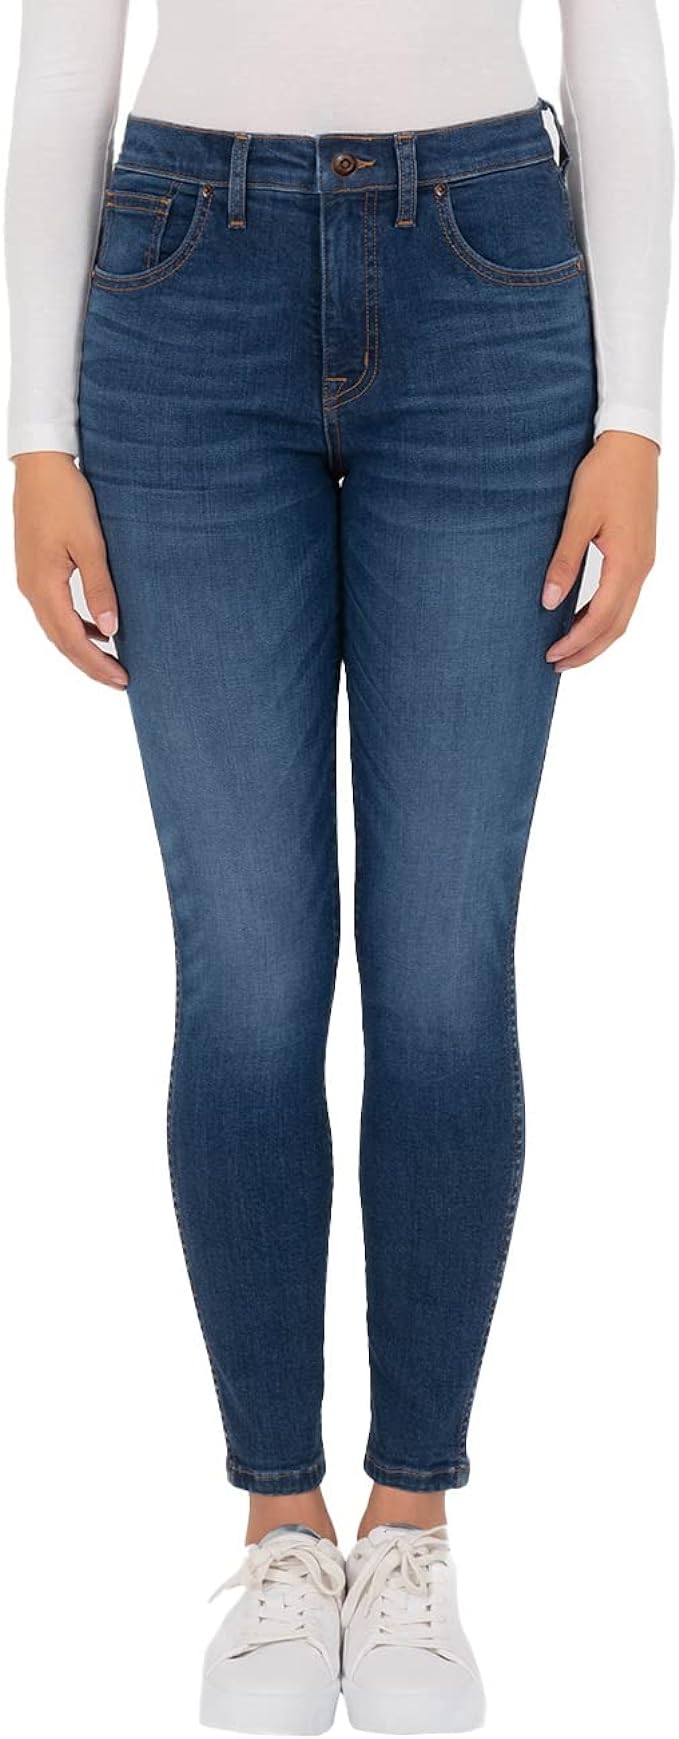 Kirkland Signature Women's High Rise Skinny Jeans (Blue, 12)